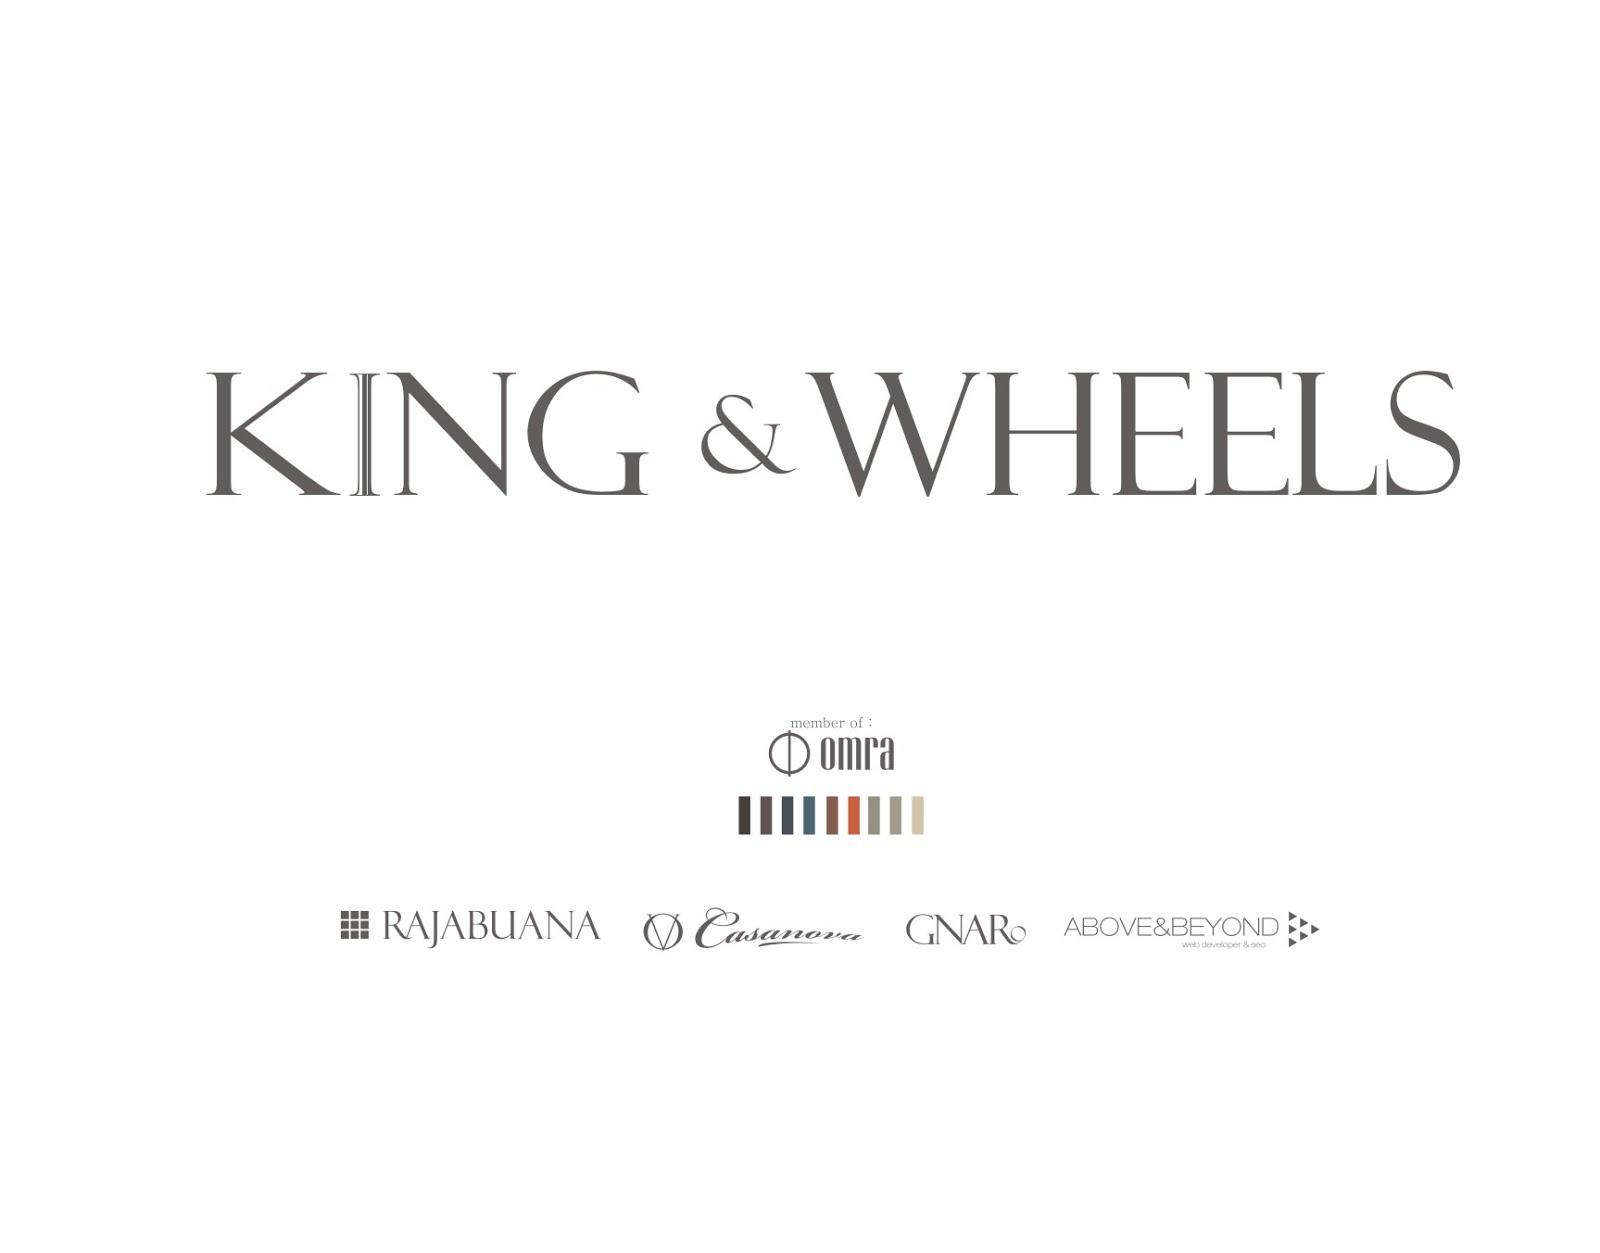 kingandwheels - jual accessories JEEP wrangler ori harga bersaing